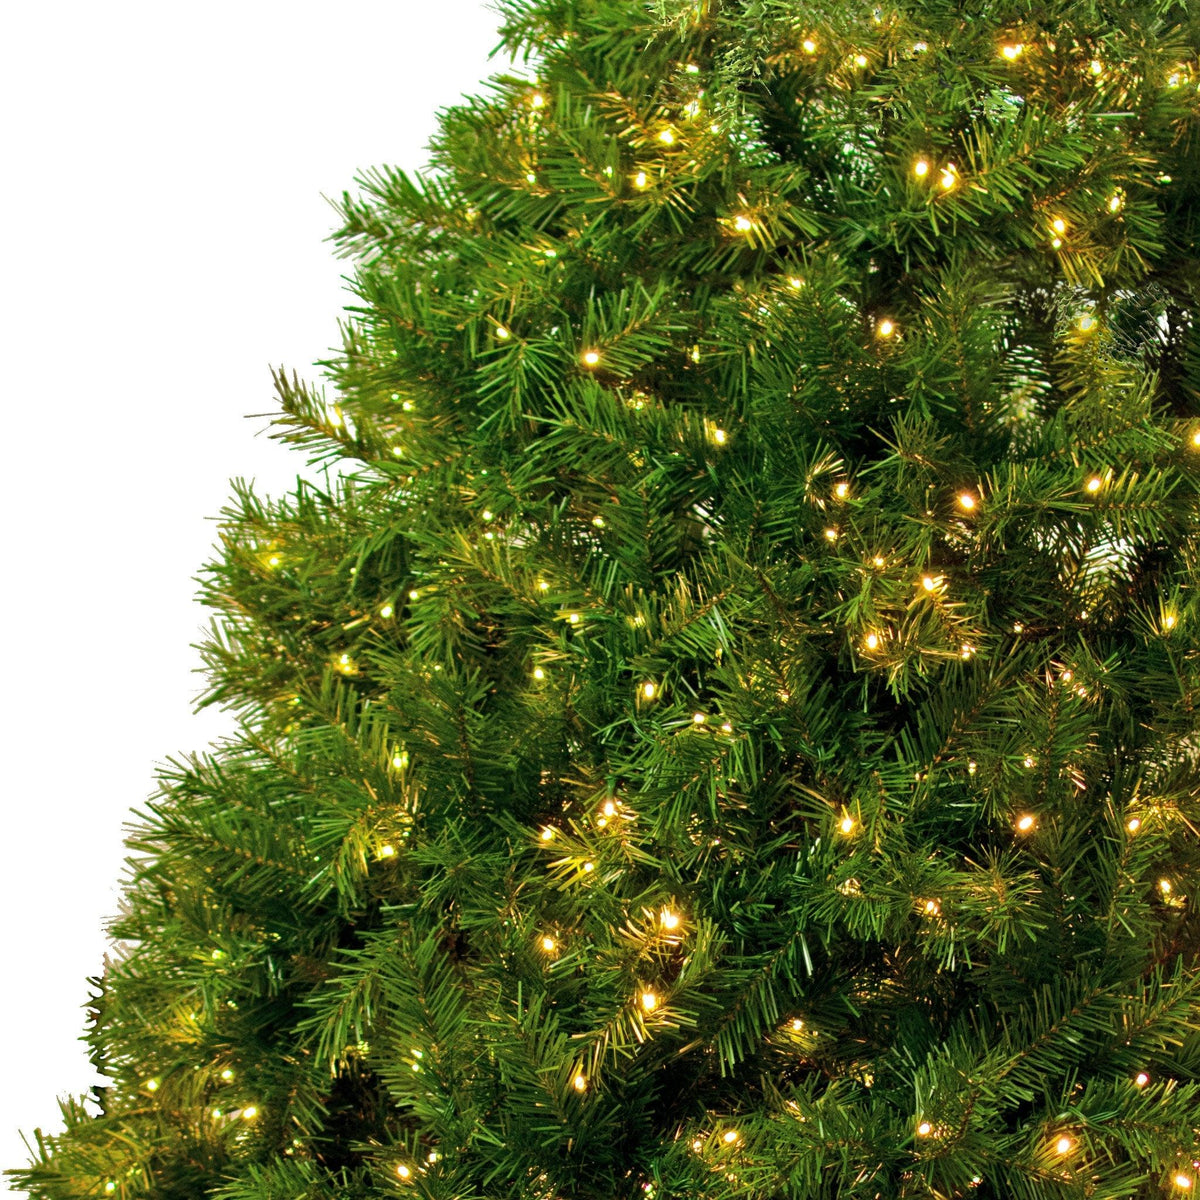 Lee Display's Original 10' Premier Pine Christmas Trees Pre-Lit with LED Warm White Steady Lights